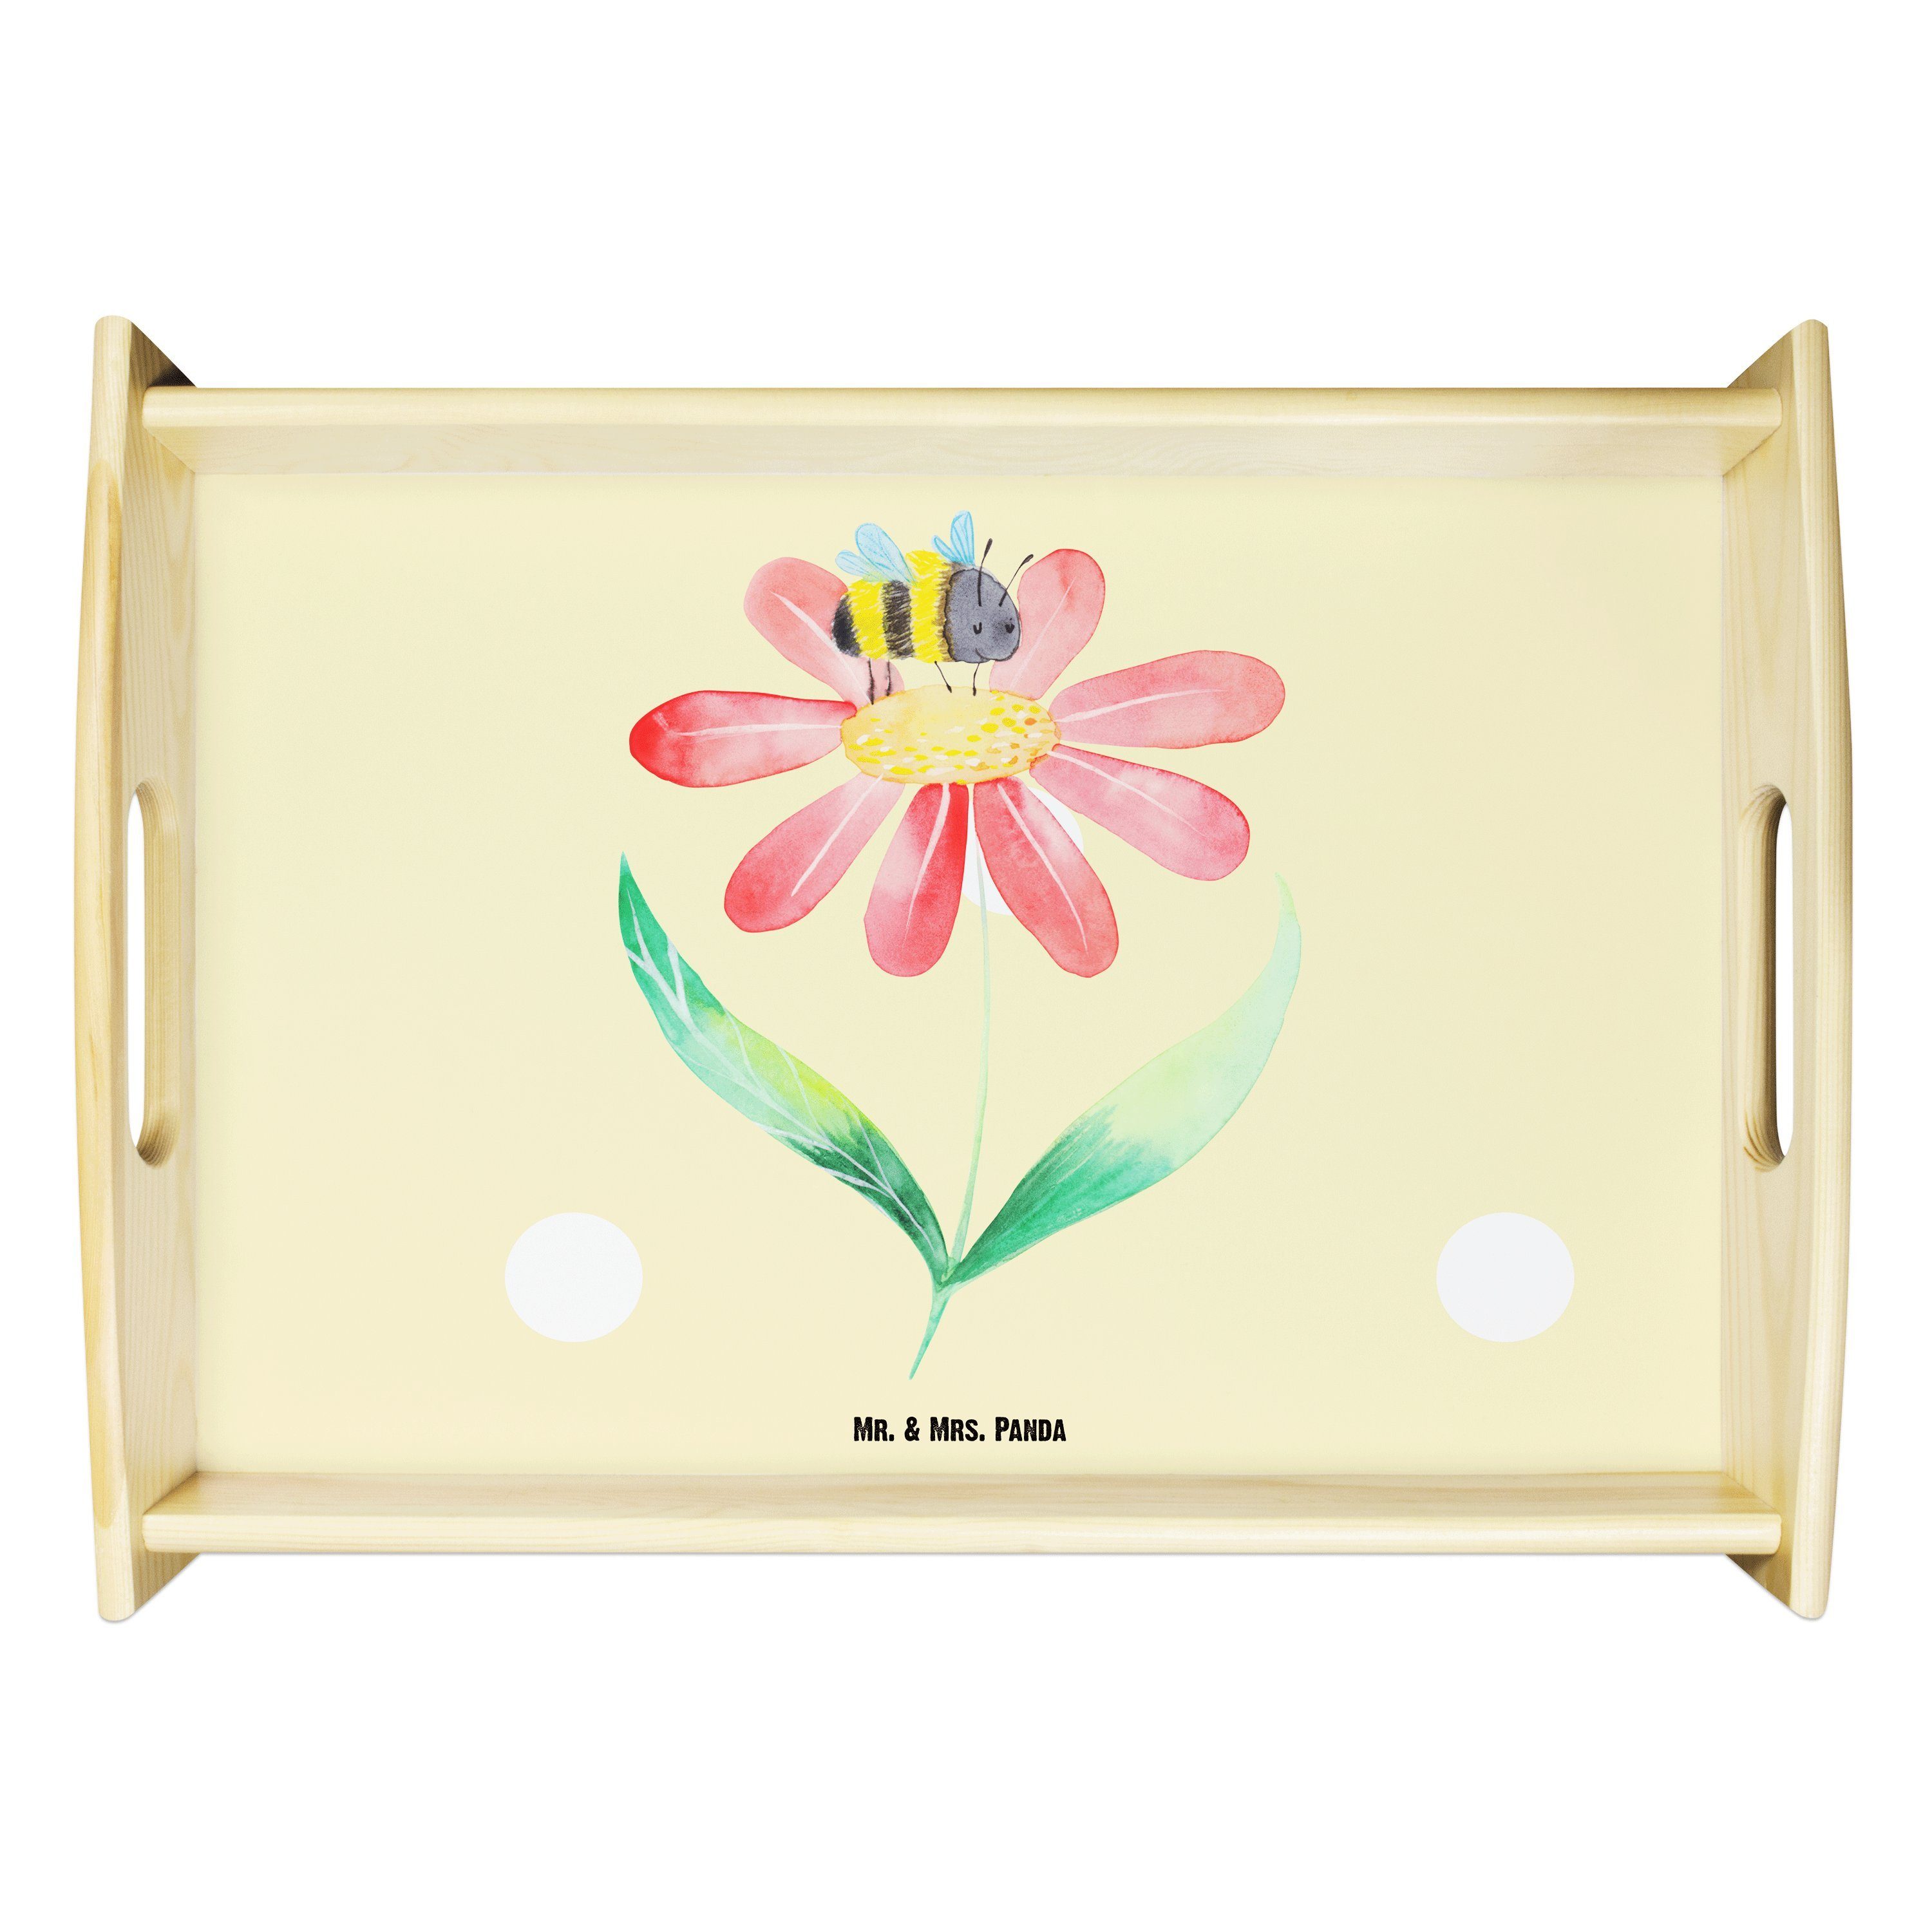 Mr. & Mrs. Panda Tablett Hummel Blume - Gelb Pastell - Geschenk, lustige Sprüche, Tiermotive, Echtholz lasiert, (1-tlg) | Tabletts